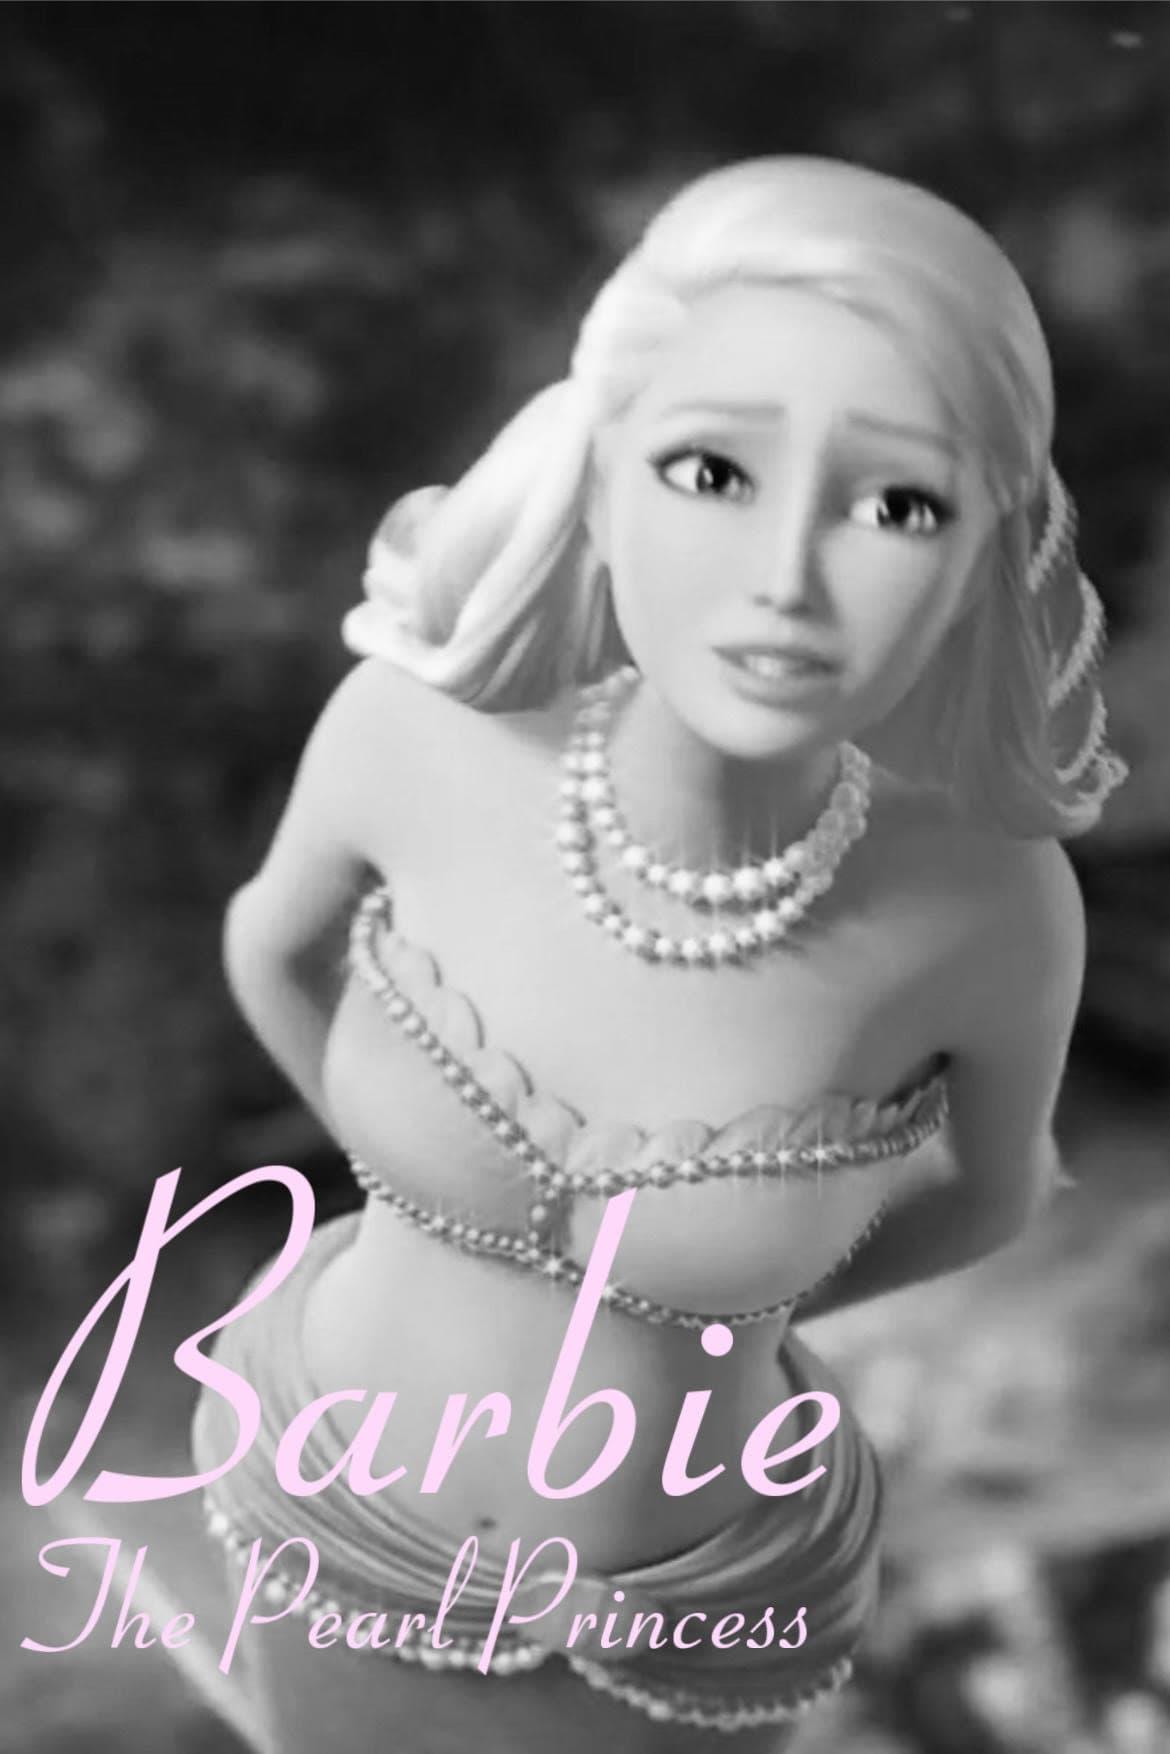 Barbie: The Pearl Princess poster